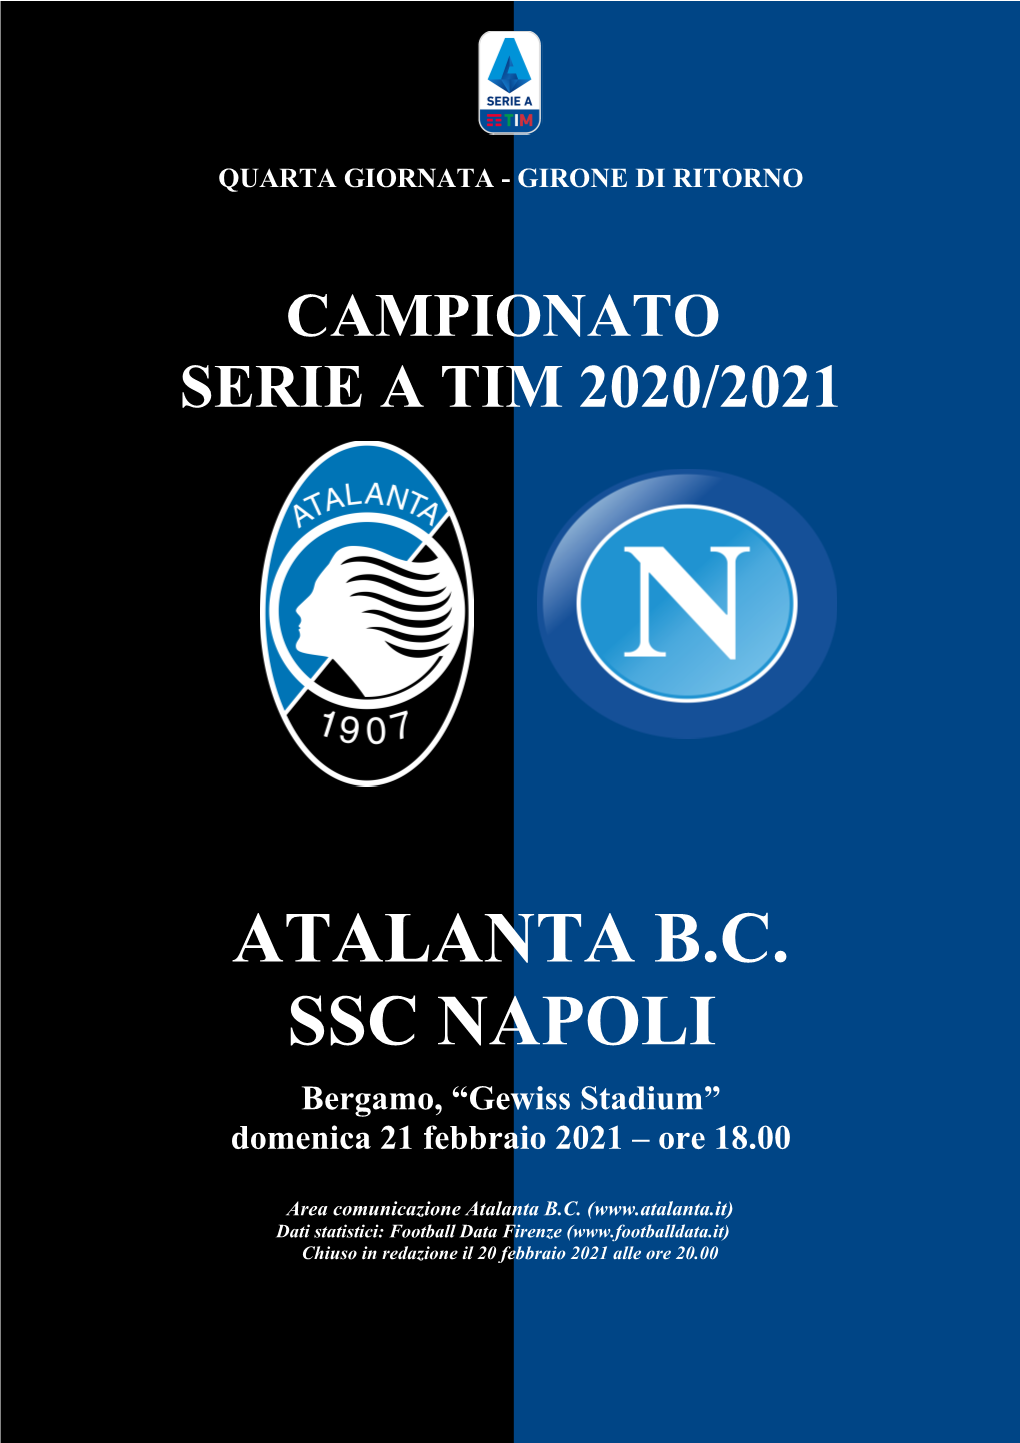 ATALANTA B.C. SSC NAPOLI Bergamo, “Gewiss Stadium” Domenica 21 Febbraio 2021 – Ore 18.00